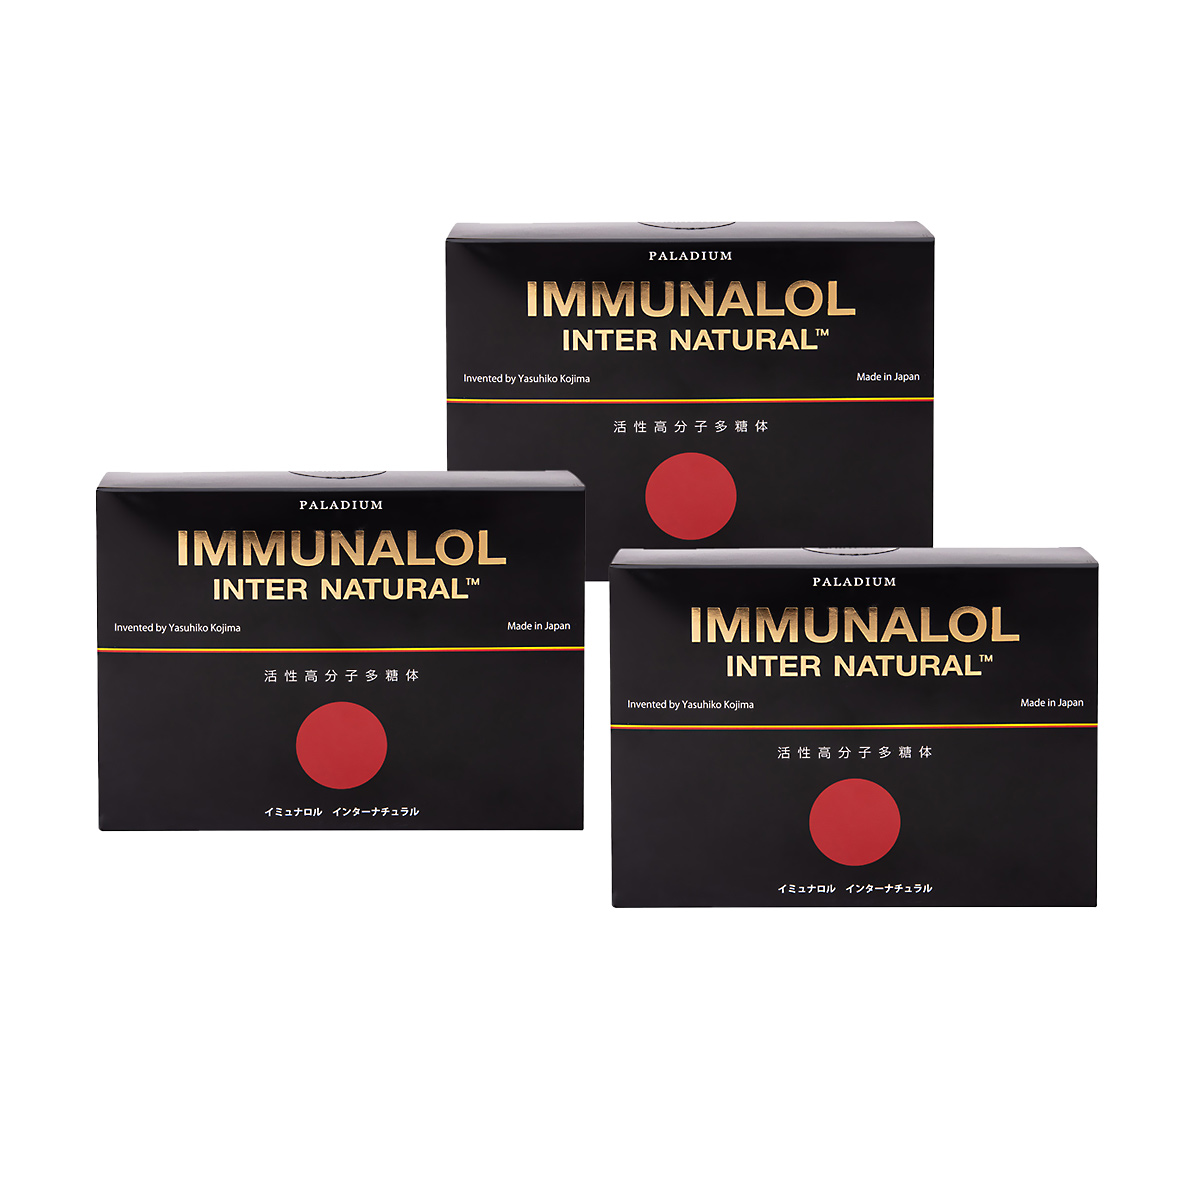 Immunalol Inter Natural, саше (3 уп. по 30 шт.) саше immunalol inter natural 2 в 1 2 уп по 30 шт